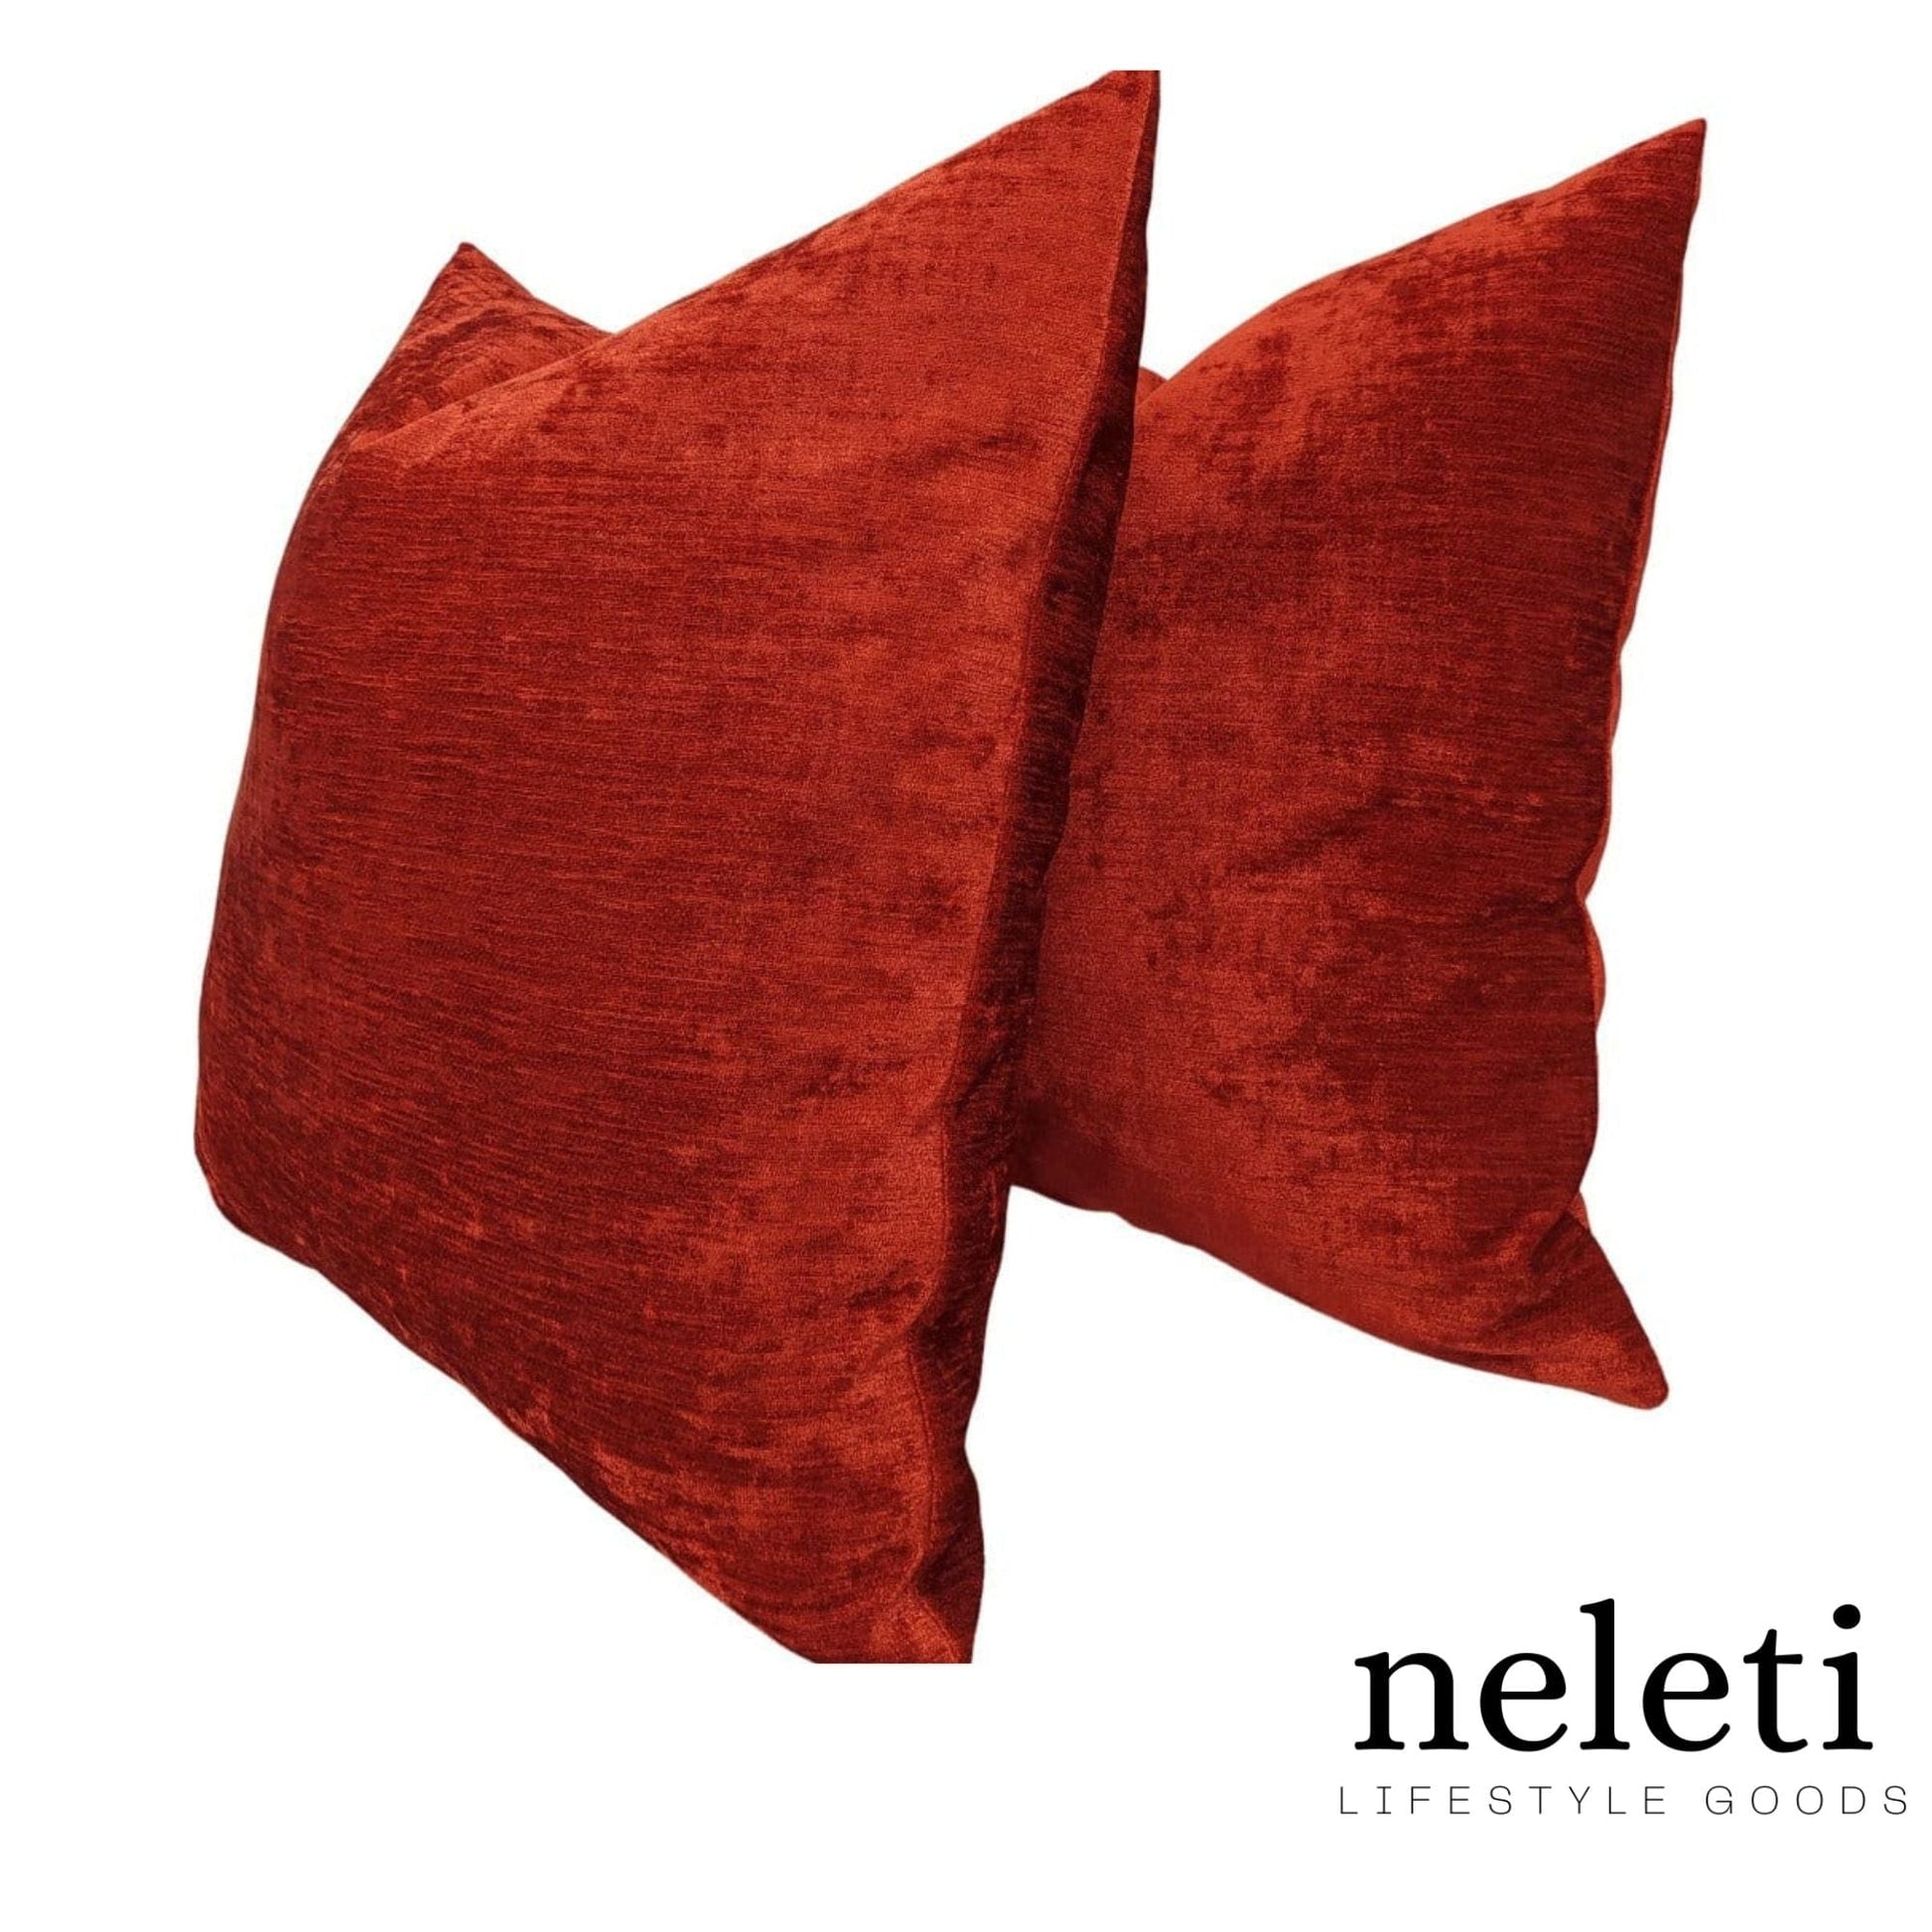 neleti.com-orange-chenille-throw-pillow-cover